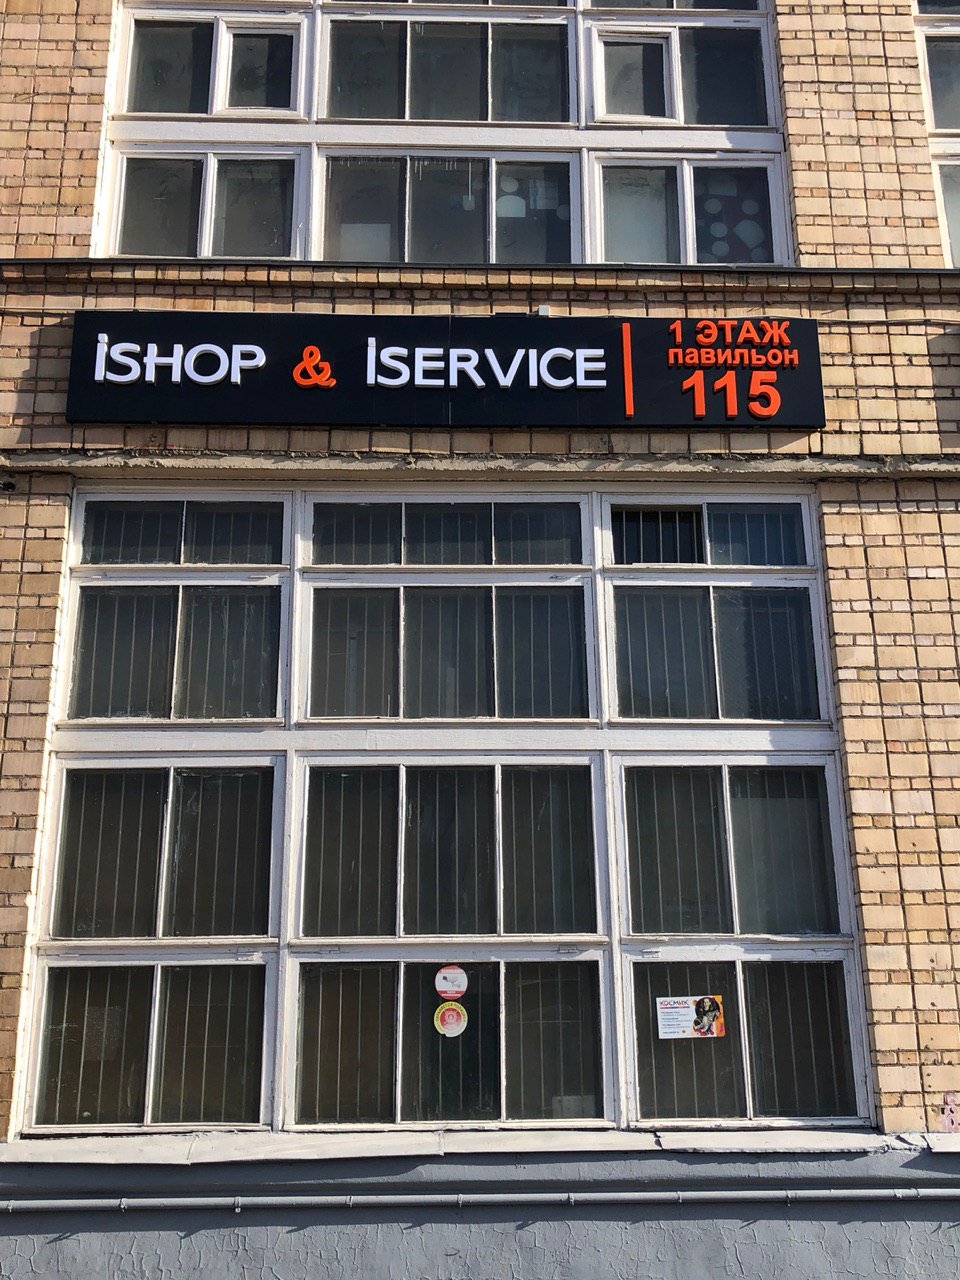 Ishopiservice, сервисный центр, улица Барклая, 8, 115 павильон, 1 этаж